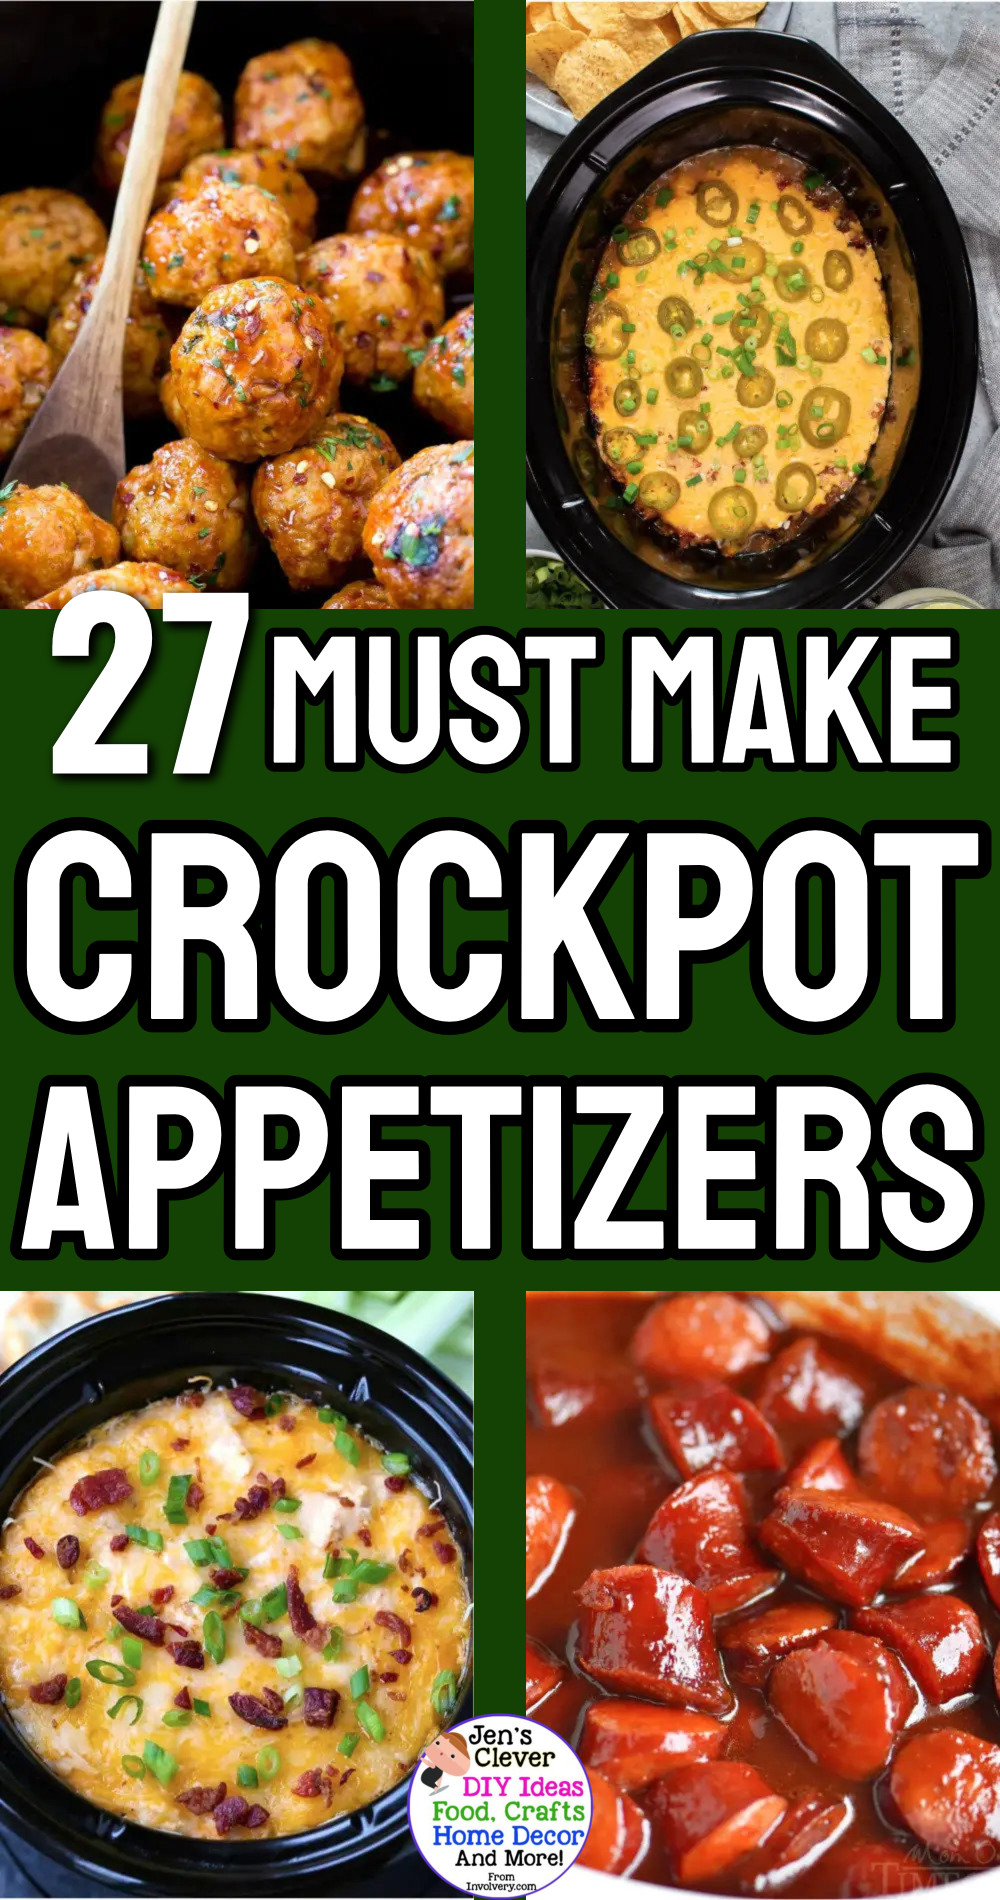 27 must make crockpot appetizers